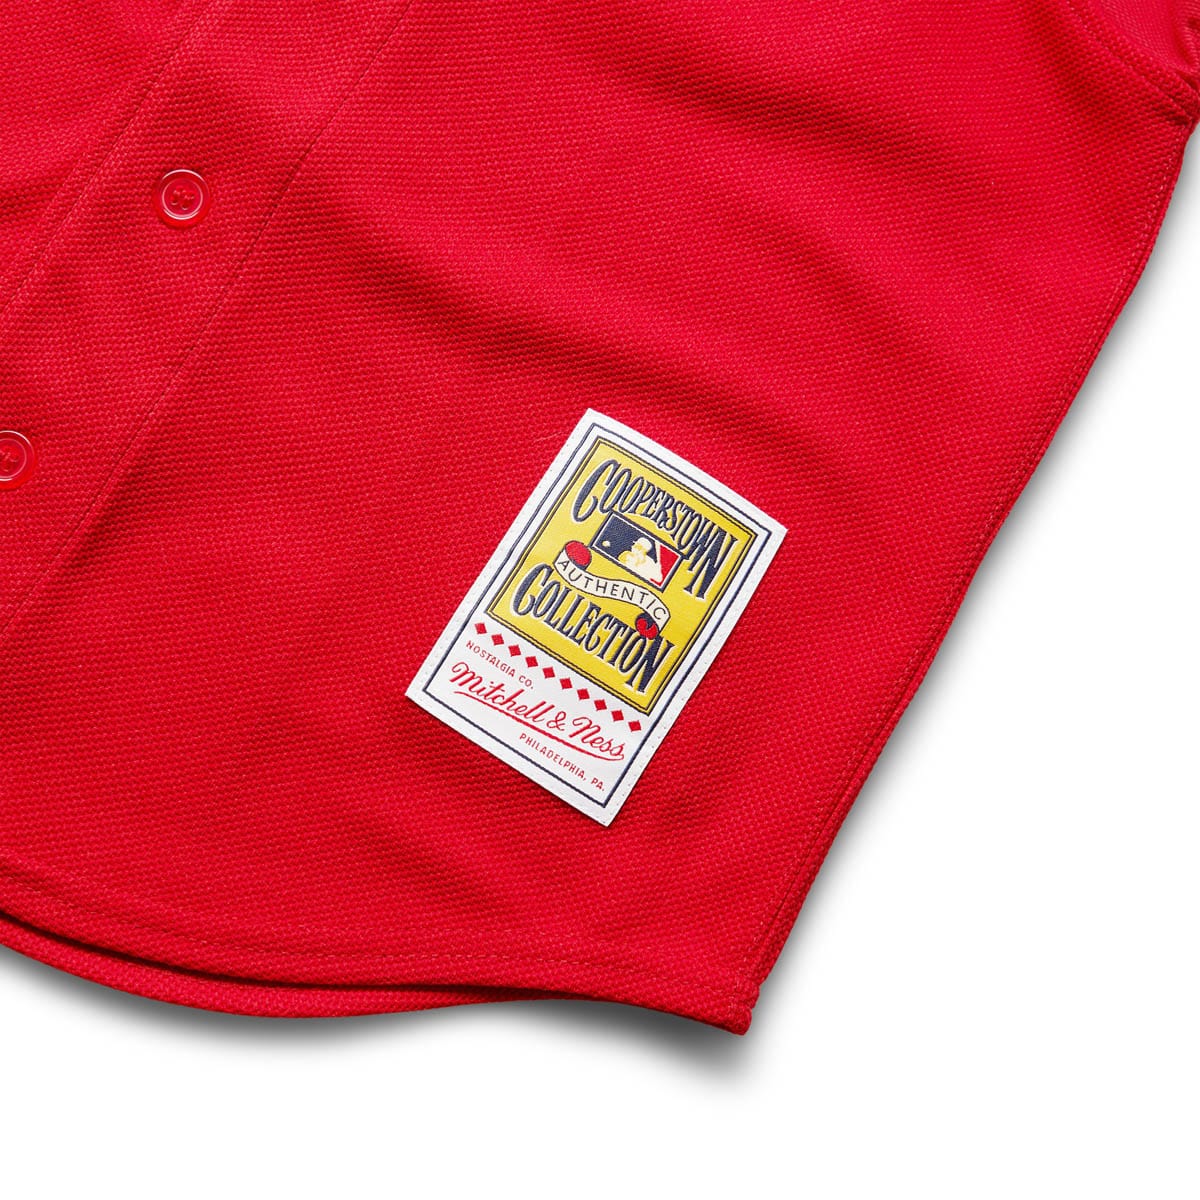 Mitchell & Ness T-Shirts MLB BP JERSEY RED SOX 2004 DAVID ORTIZ